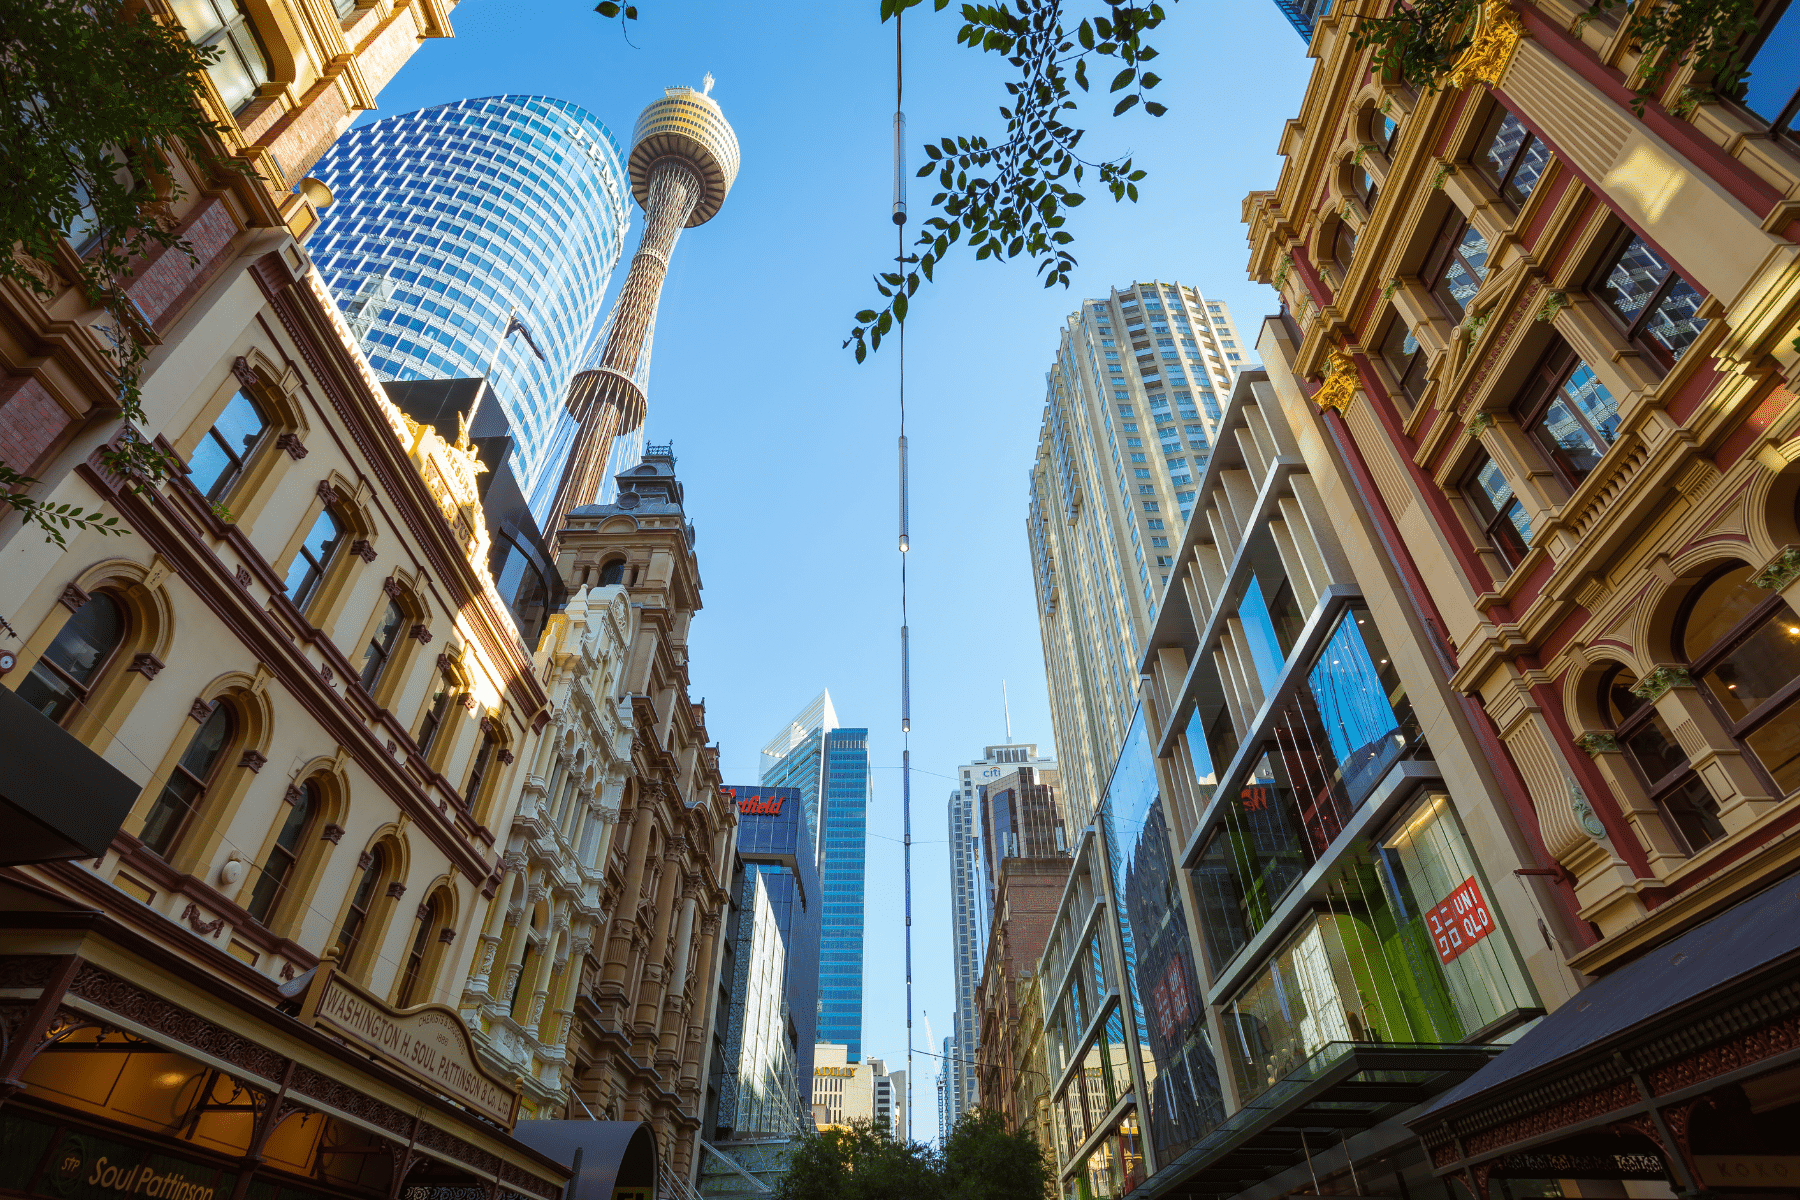 A narrow street in Australia.